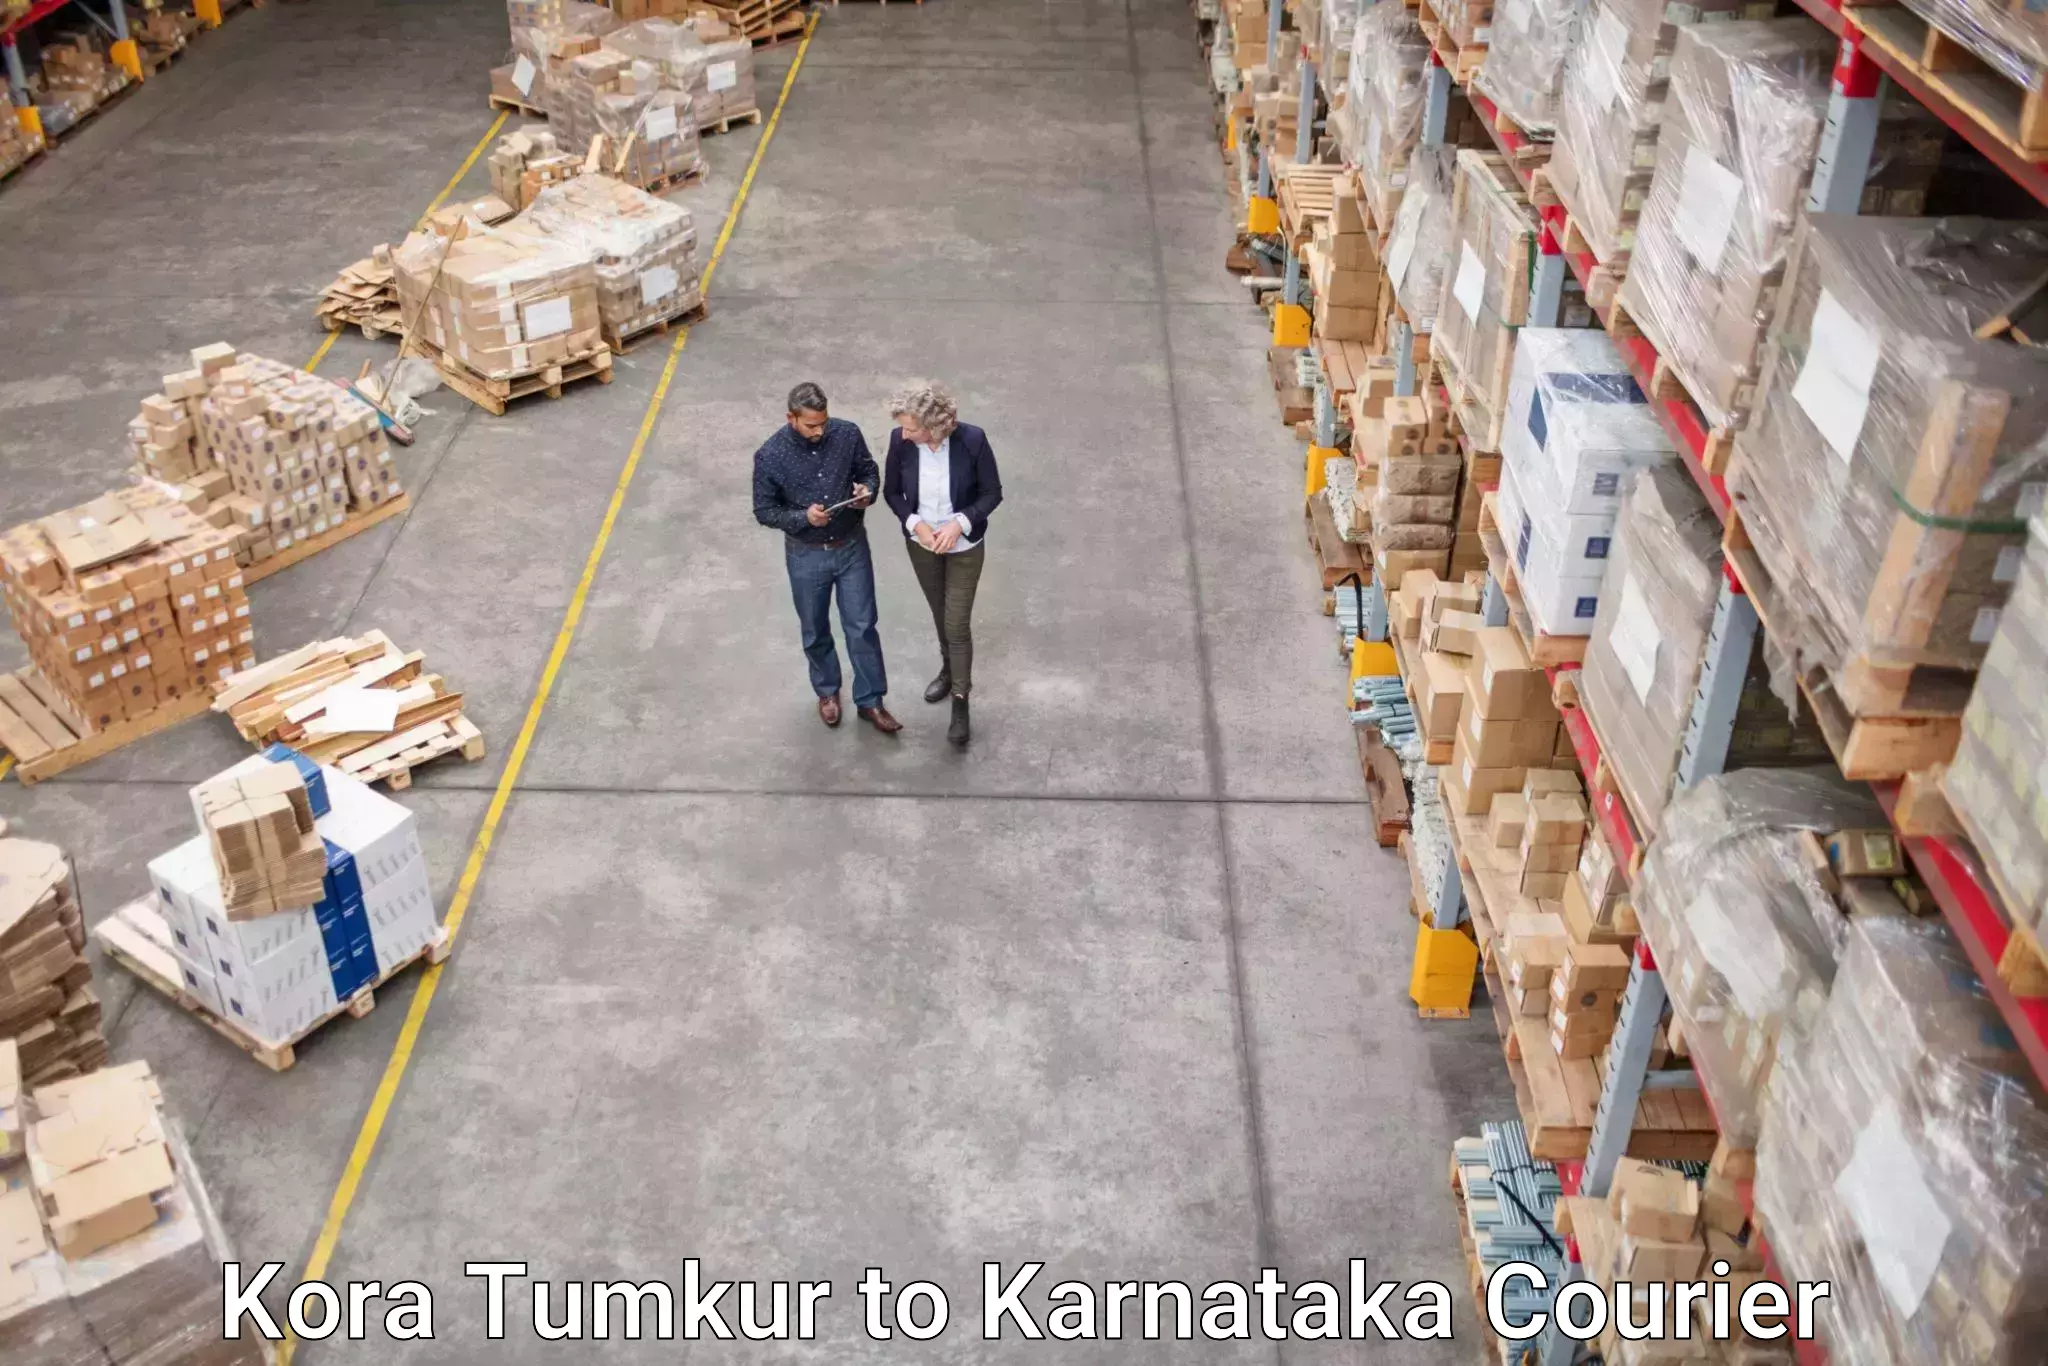 Courier service partnerships Kora Tumkur to Alnavar